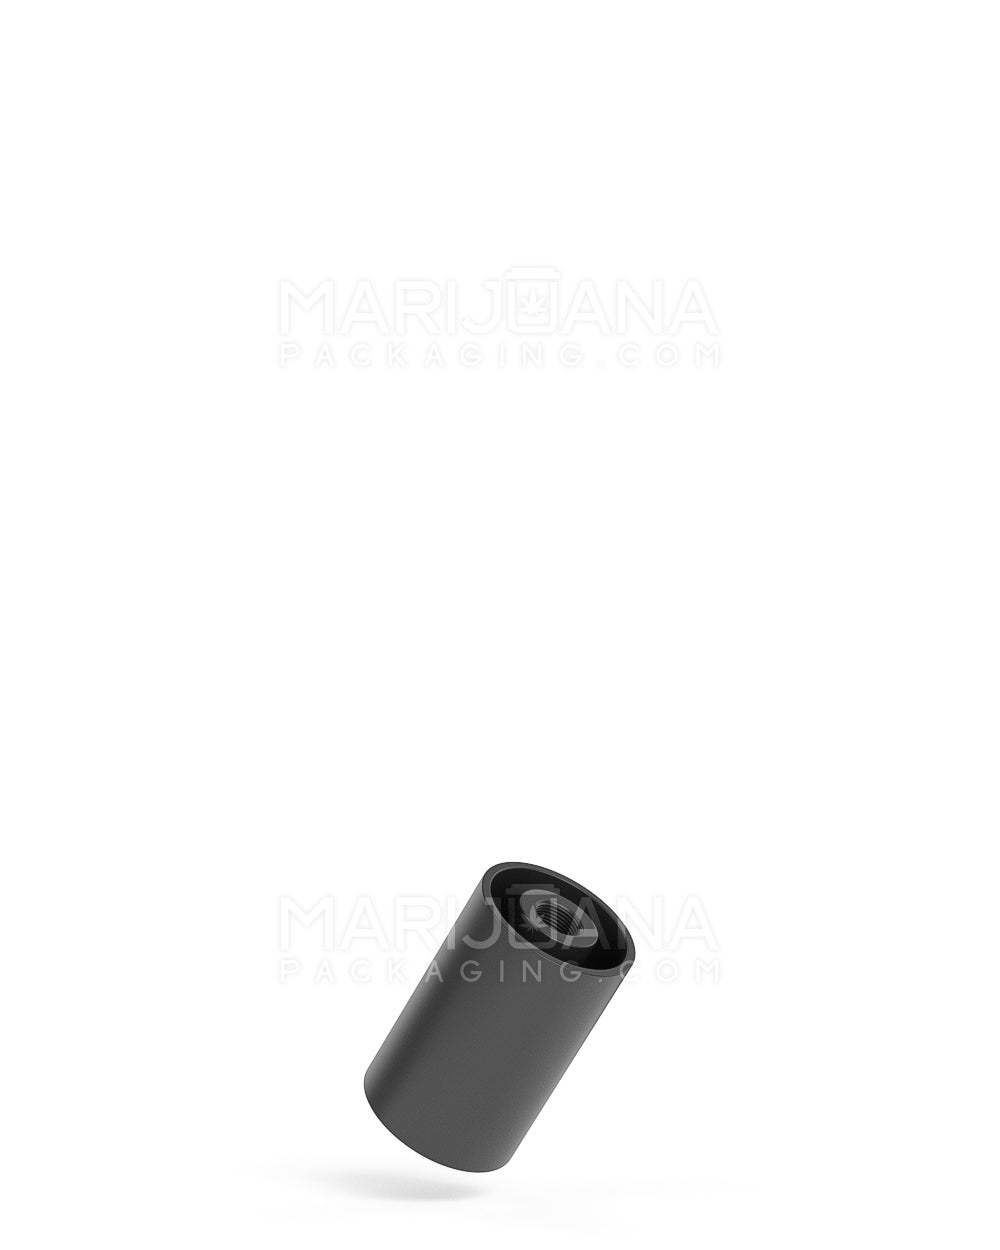 POLLEN GEAR | Five10 Child Resistant Flat Vape Cartridge Tube Base | 35mm - Matte Black - 1400 Count - 1